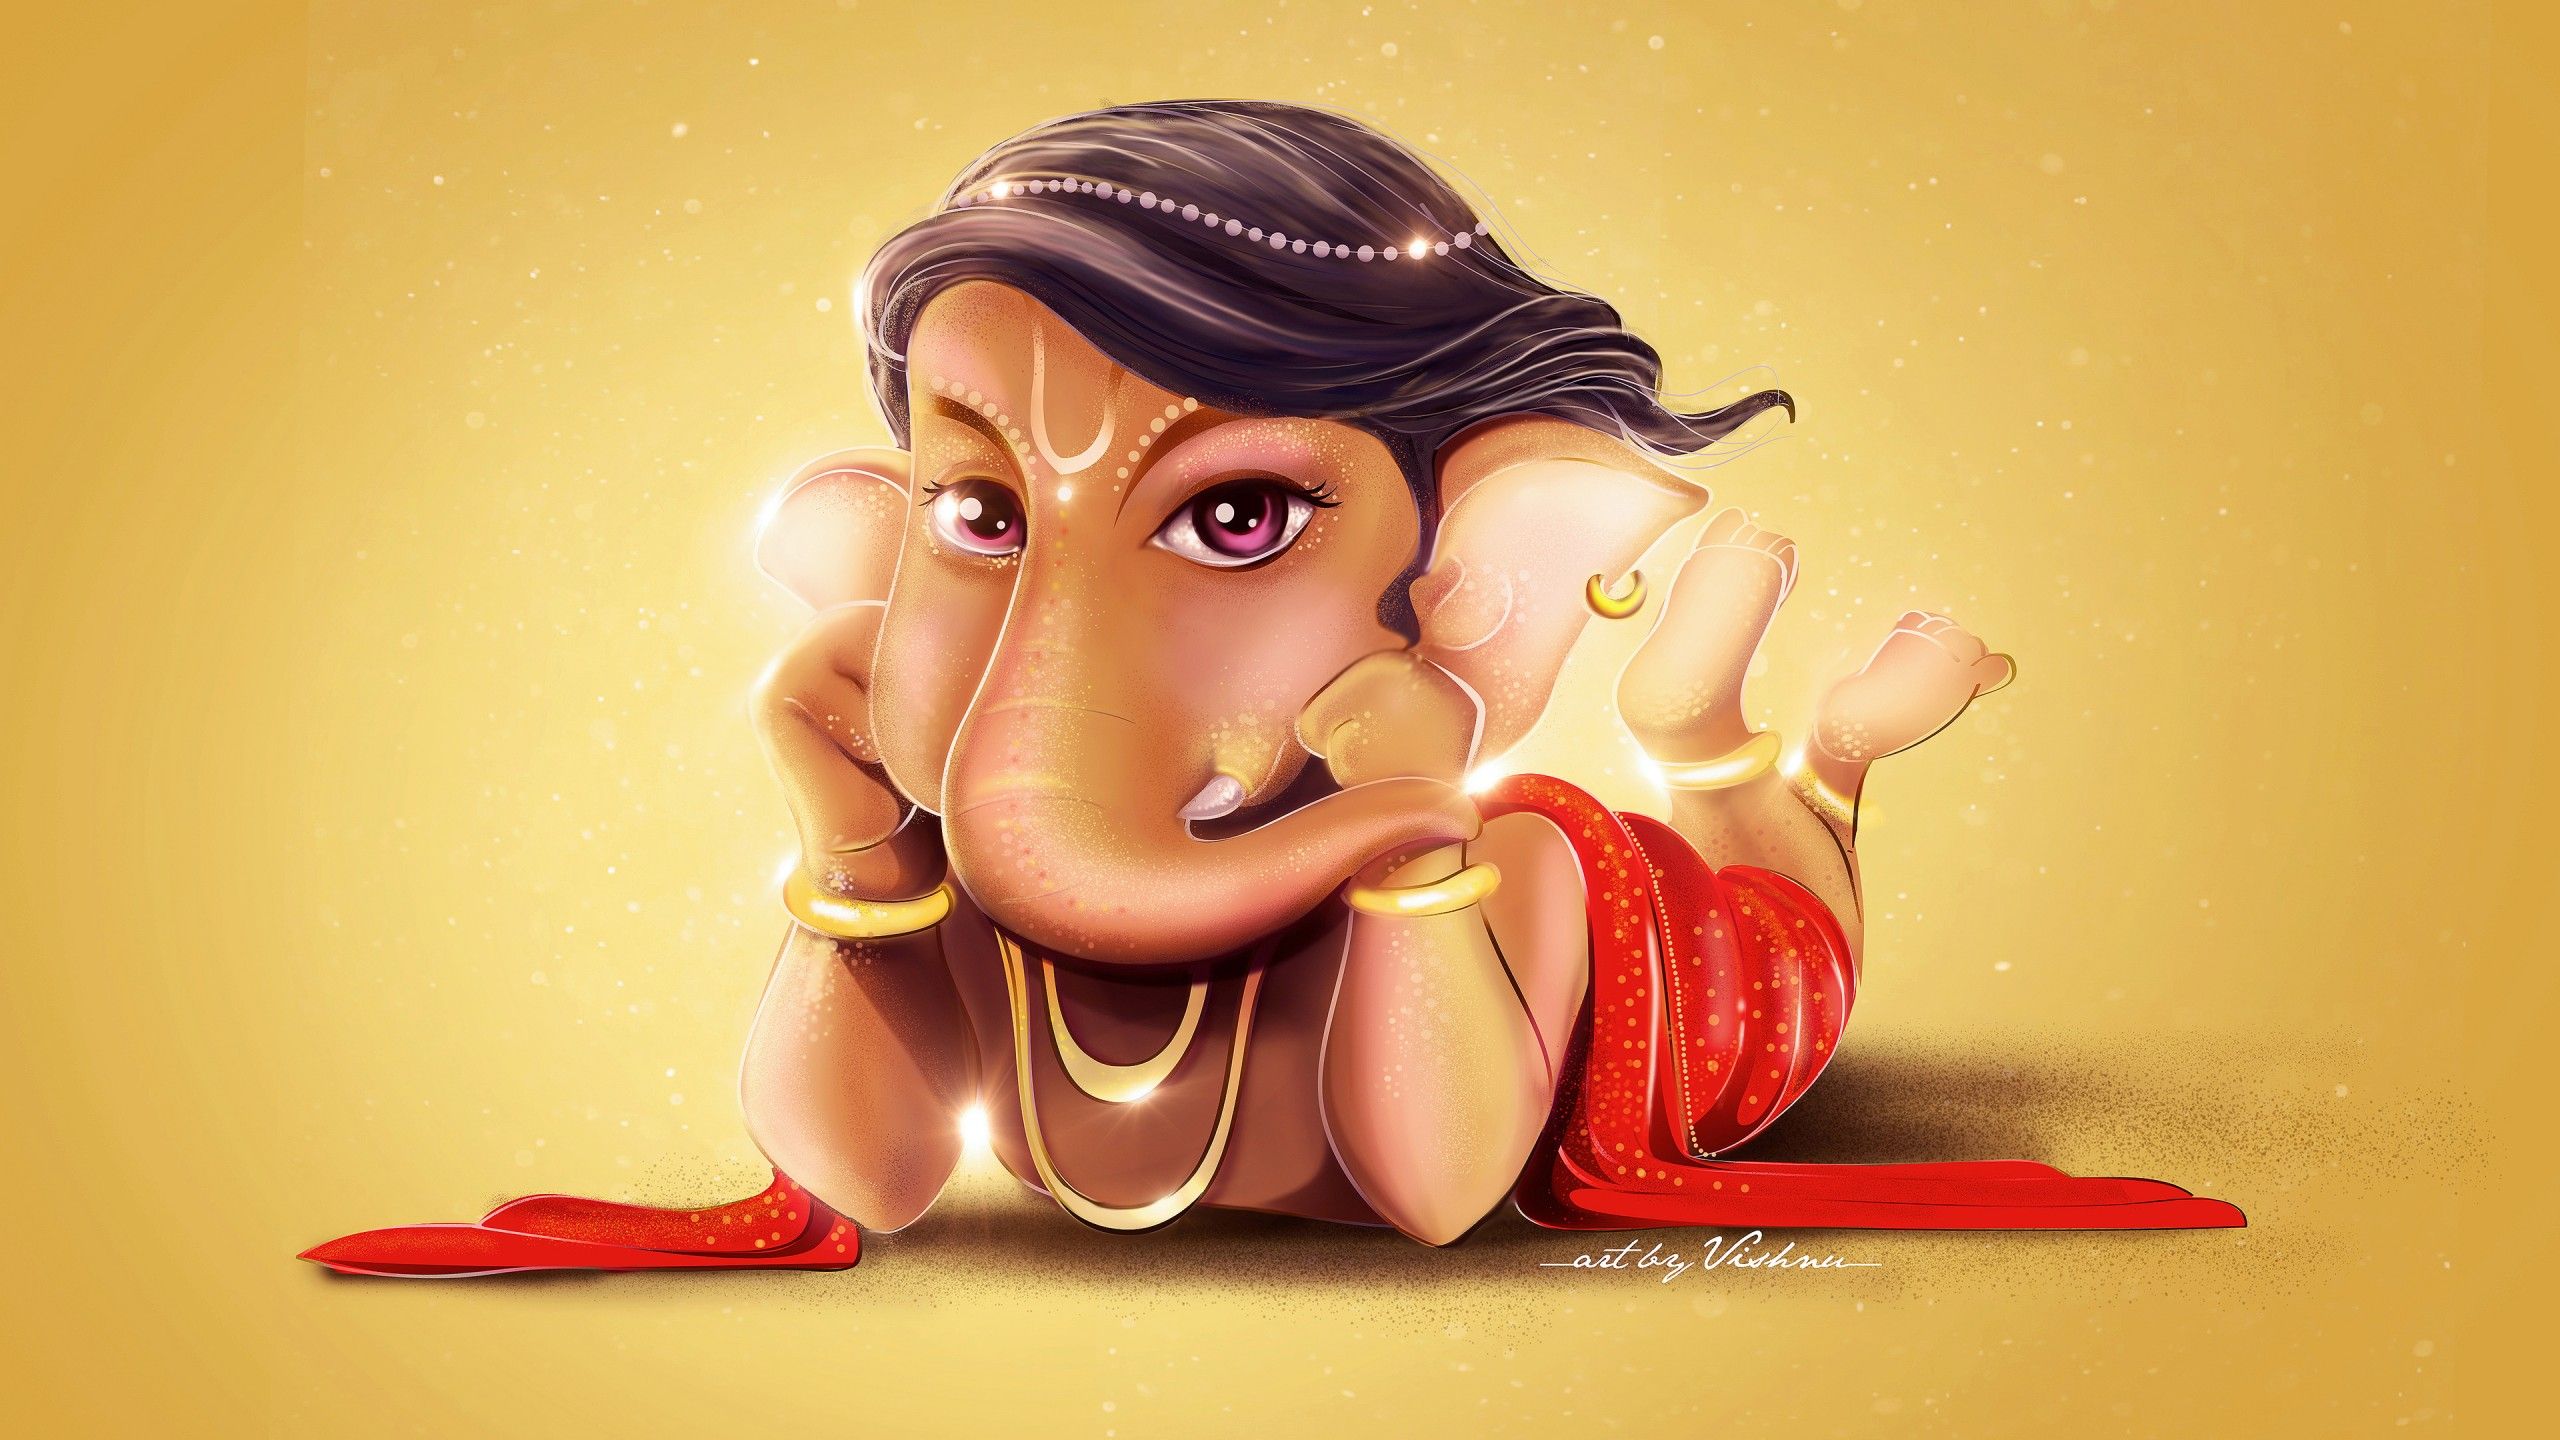 Wallpaper Lord Ganesha, Cute, Digital art, HD, 4K, Creative Graphics,. Wallpaper for iPhone, Android, Mobile and Desktop